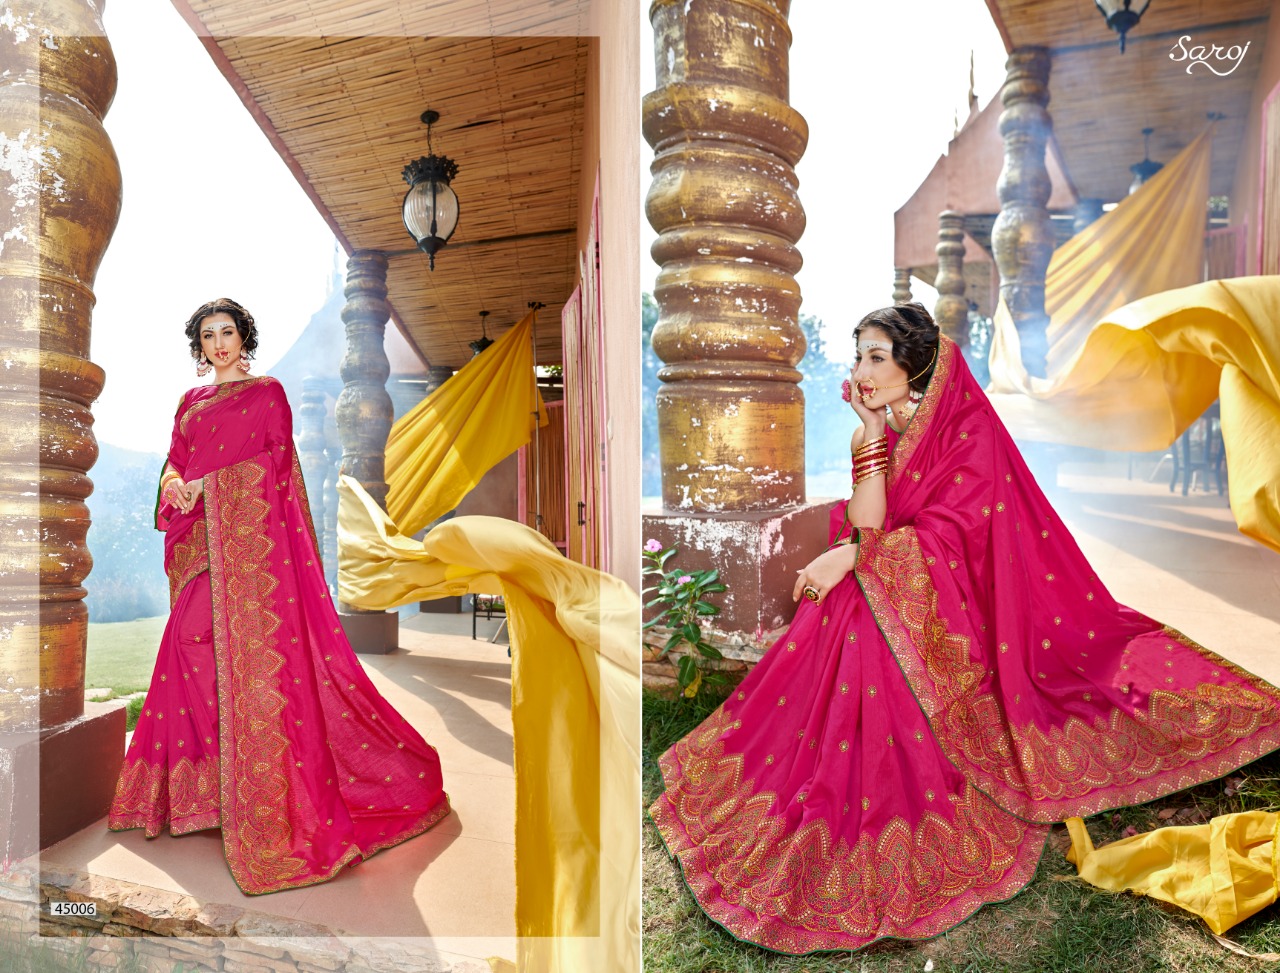 Saroj zoya vol 4 colourful work silk sarees collection dealer